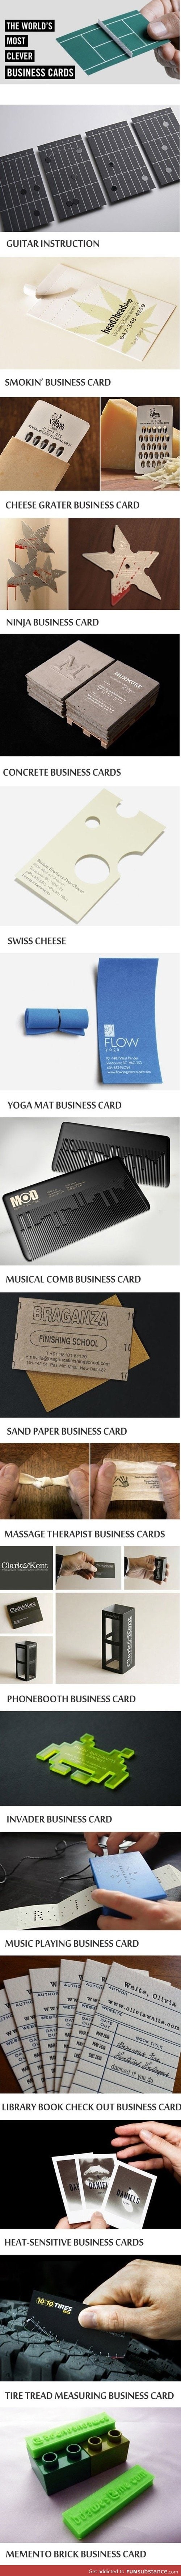 Super Creative Business Cards